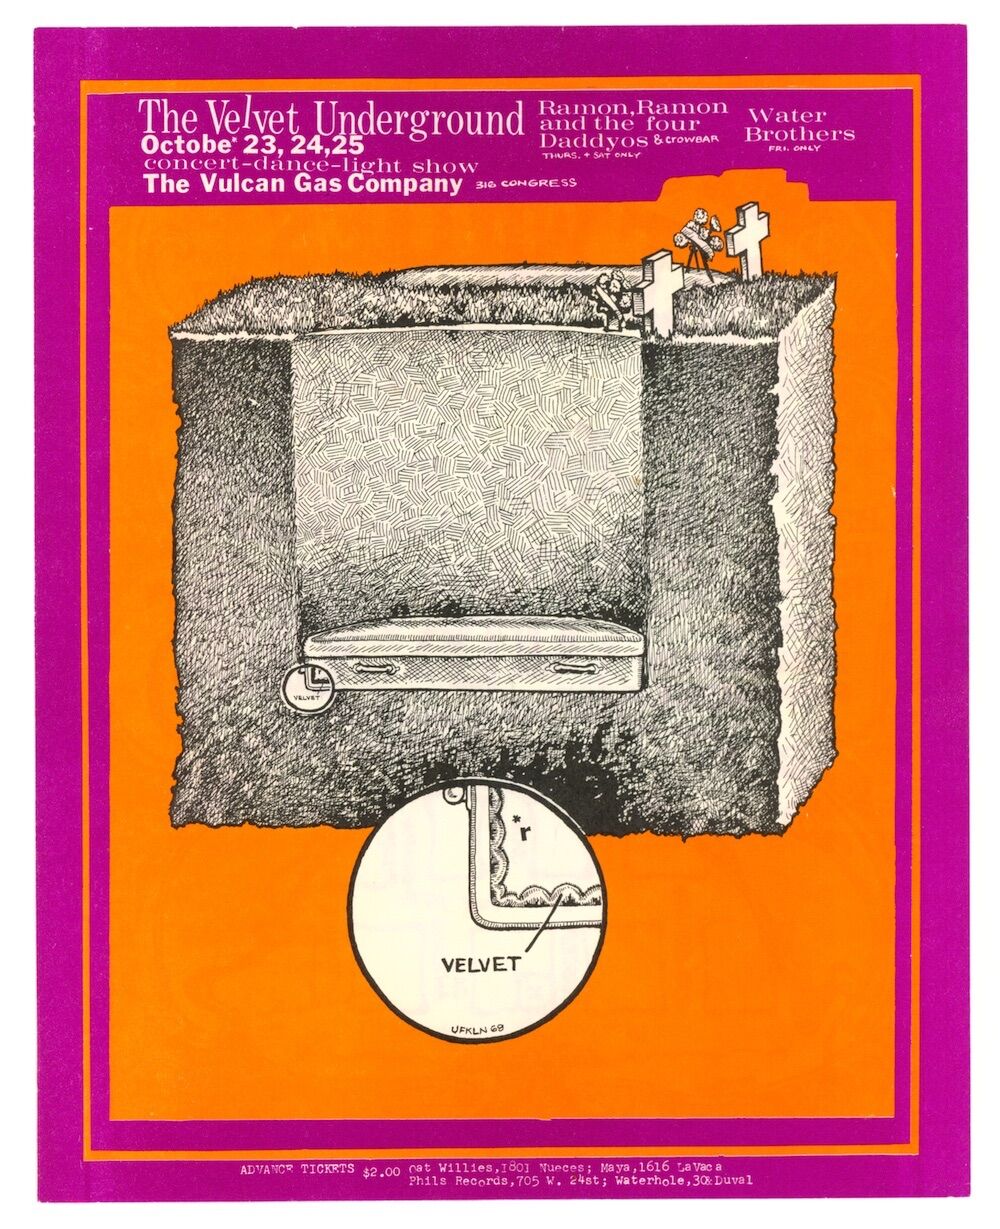 Velvet Underground poster by Jim Franklin